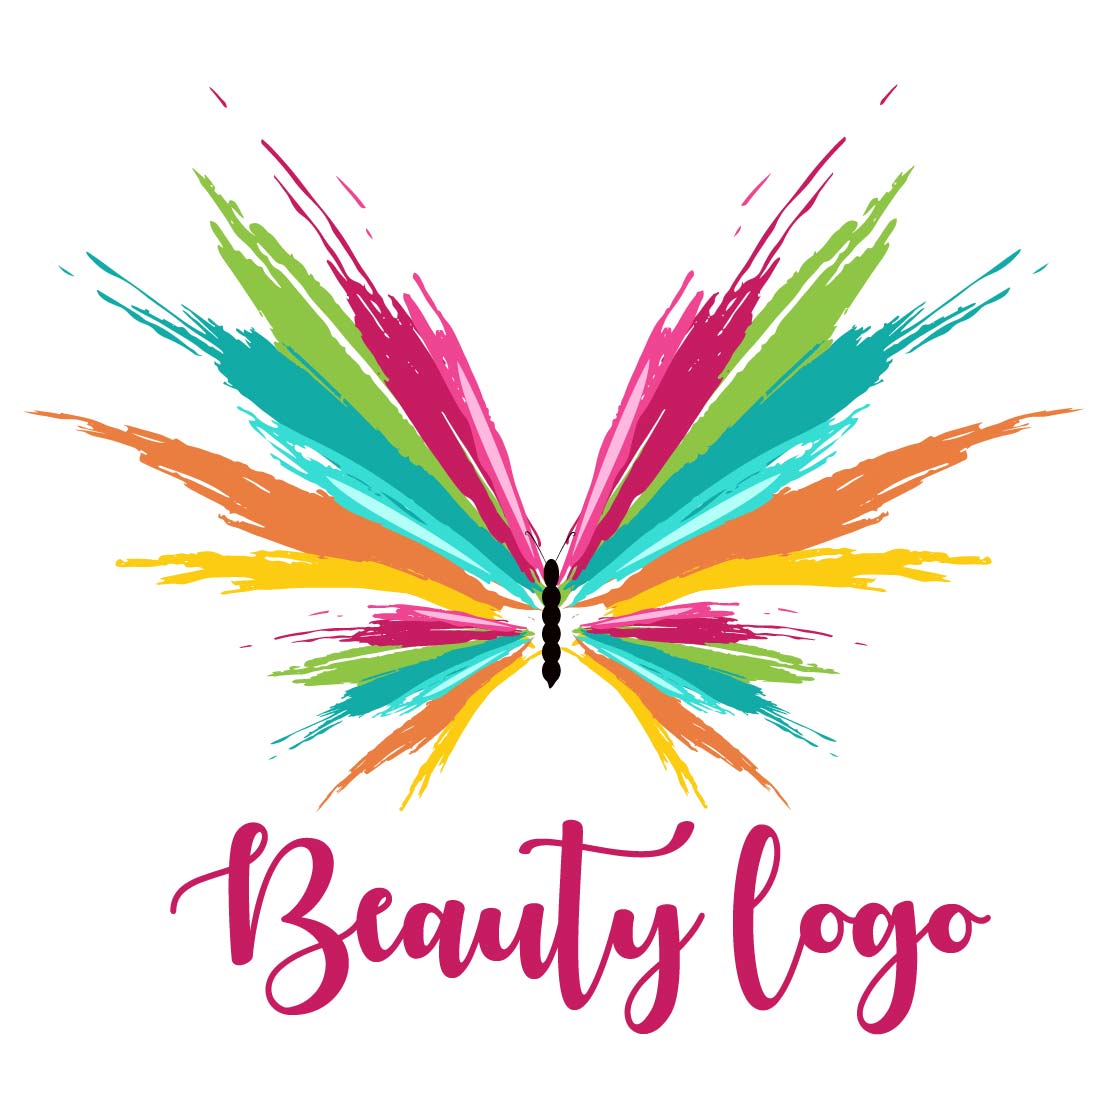 Beauty logo , spa logo cover image.